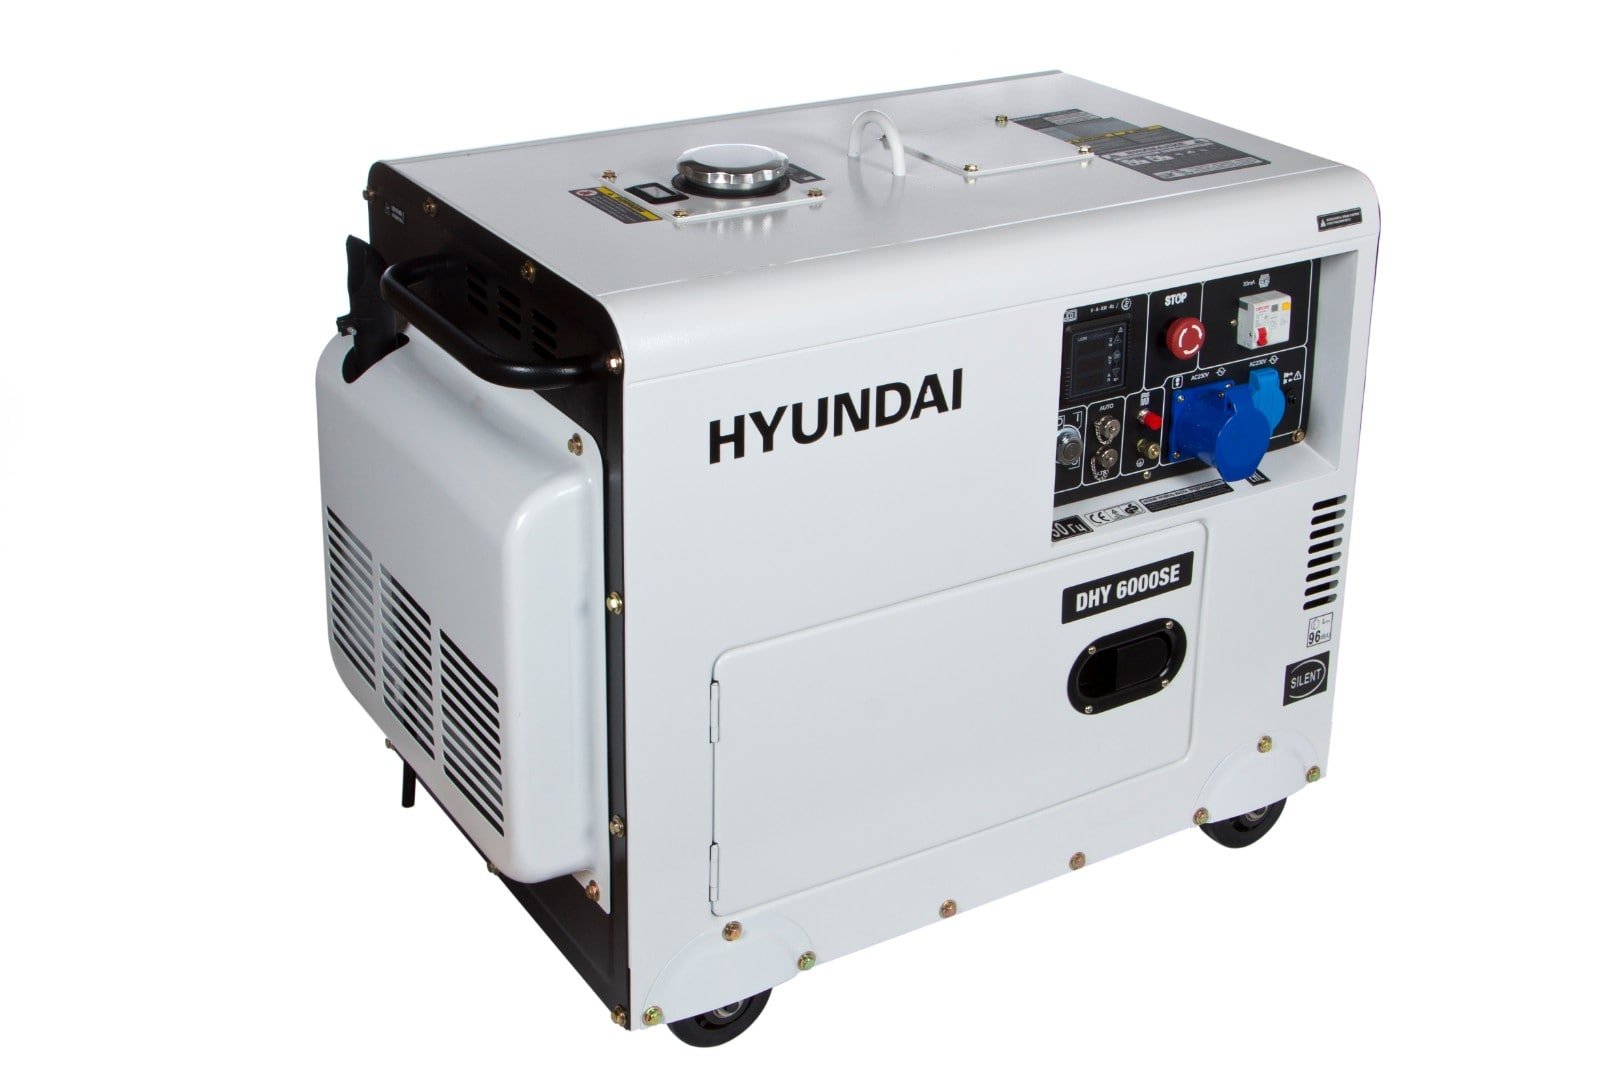 Генератор Hyundai DHY 6000 SE | 5/5,5 кВт (Корея)  67 230 грн Цена 